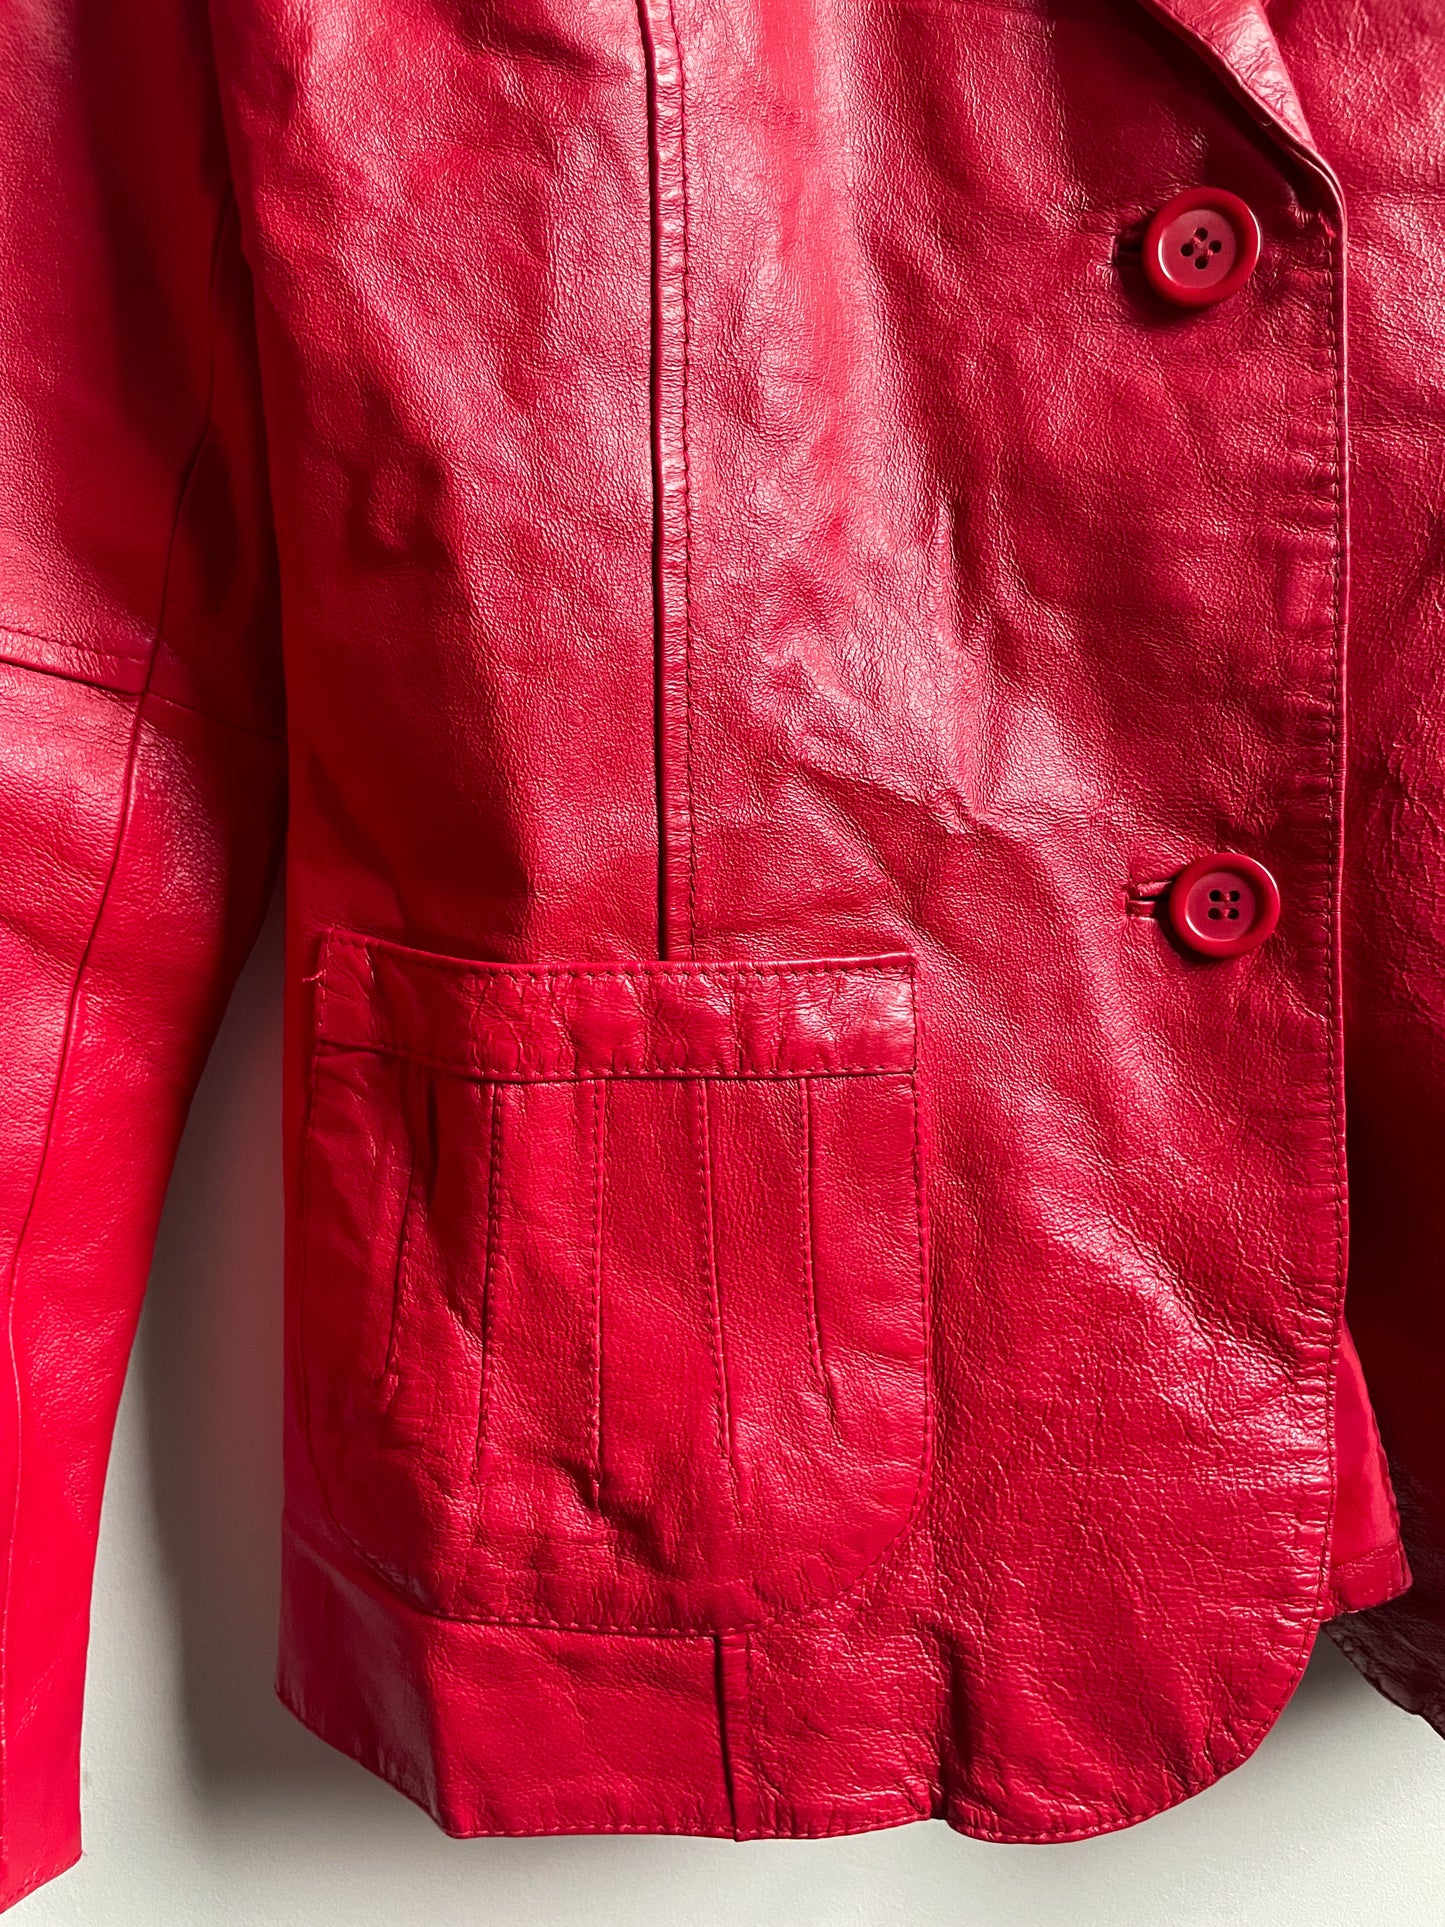 Vintage Red Leather Blazer